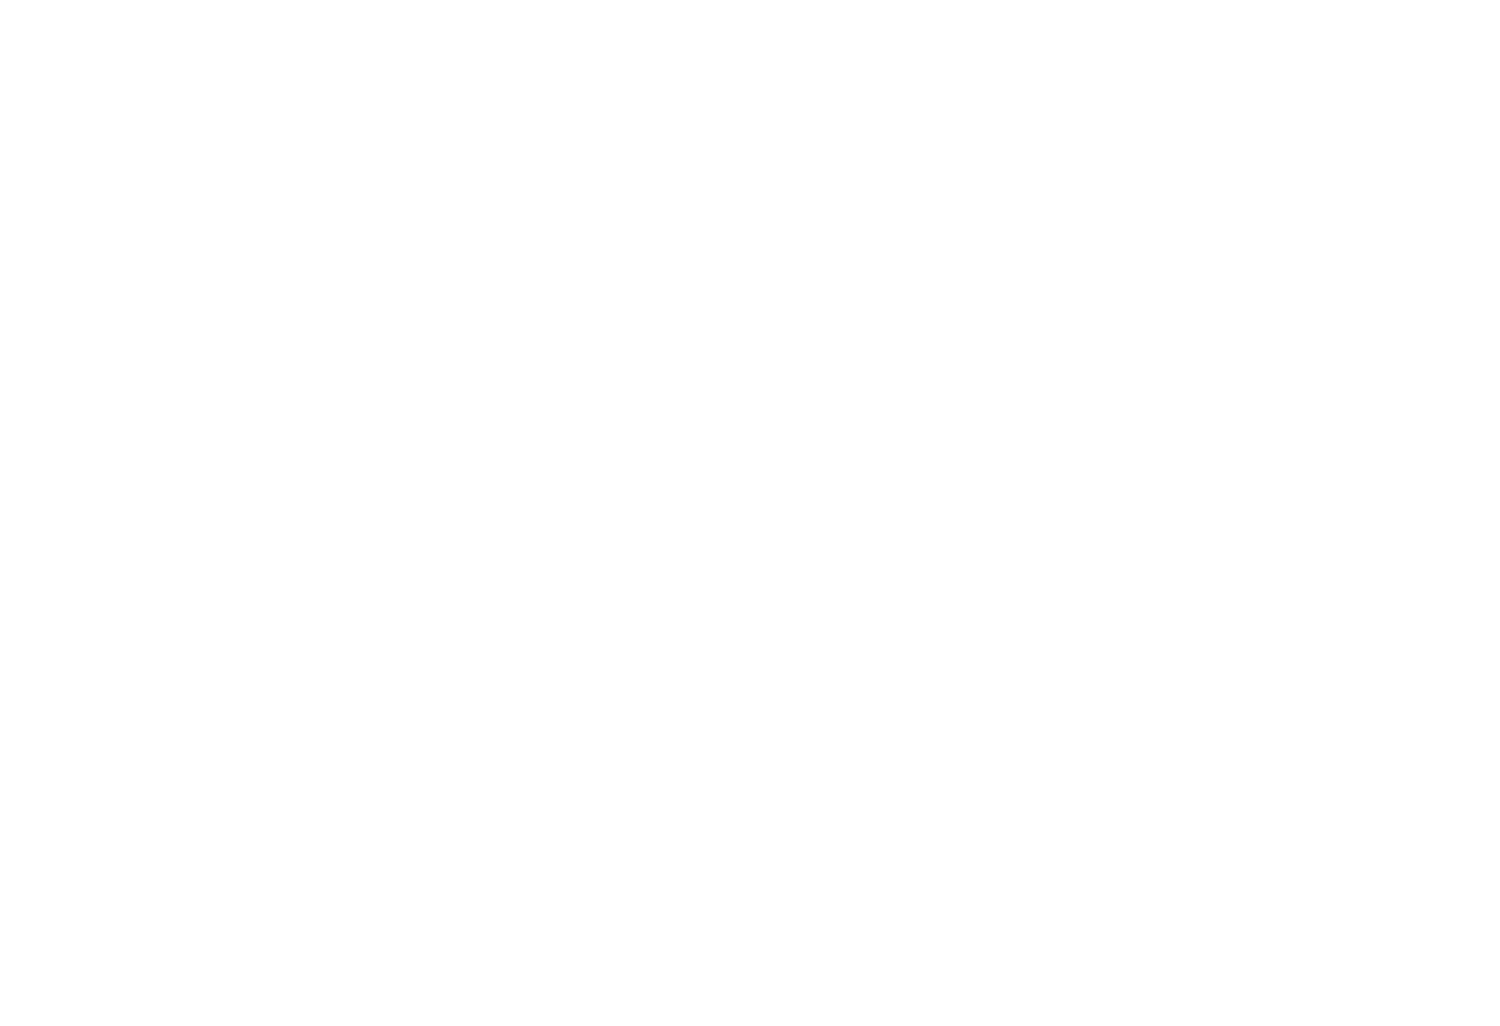 Nú Body & Mind